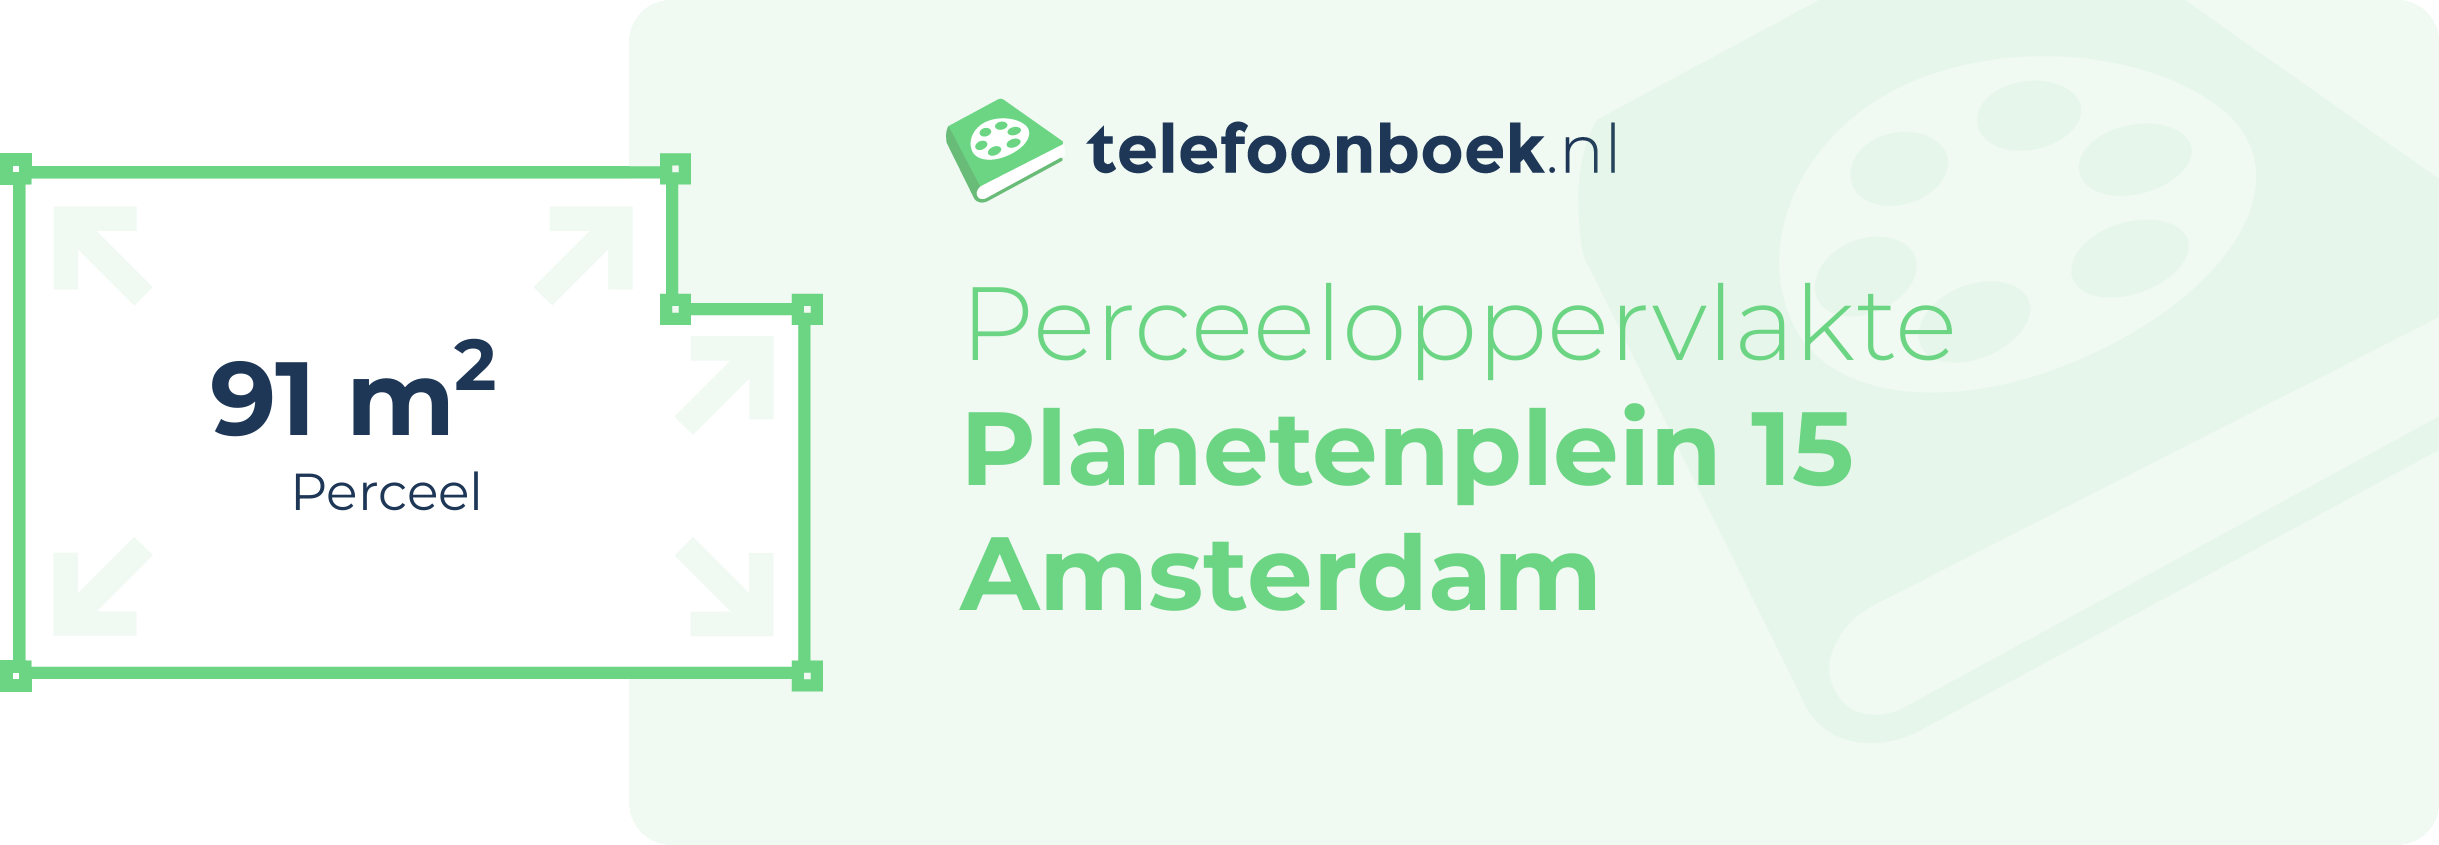 Perceeloppervlakte Planetenplein 15 Amsterdam